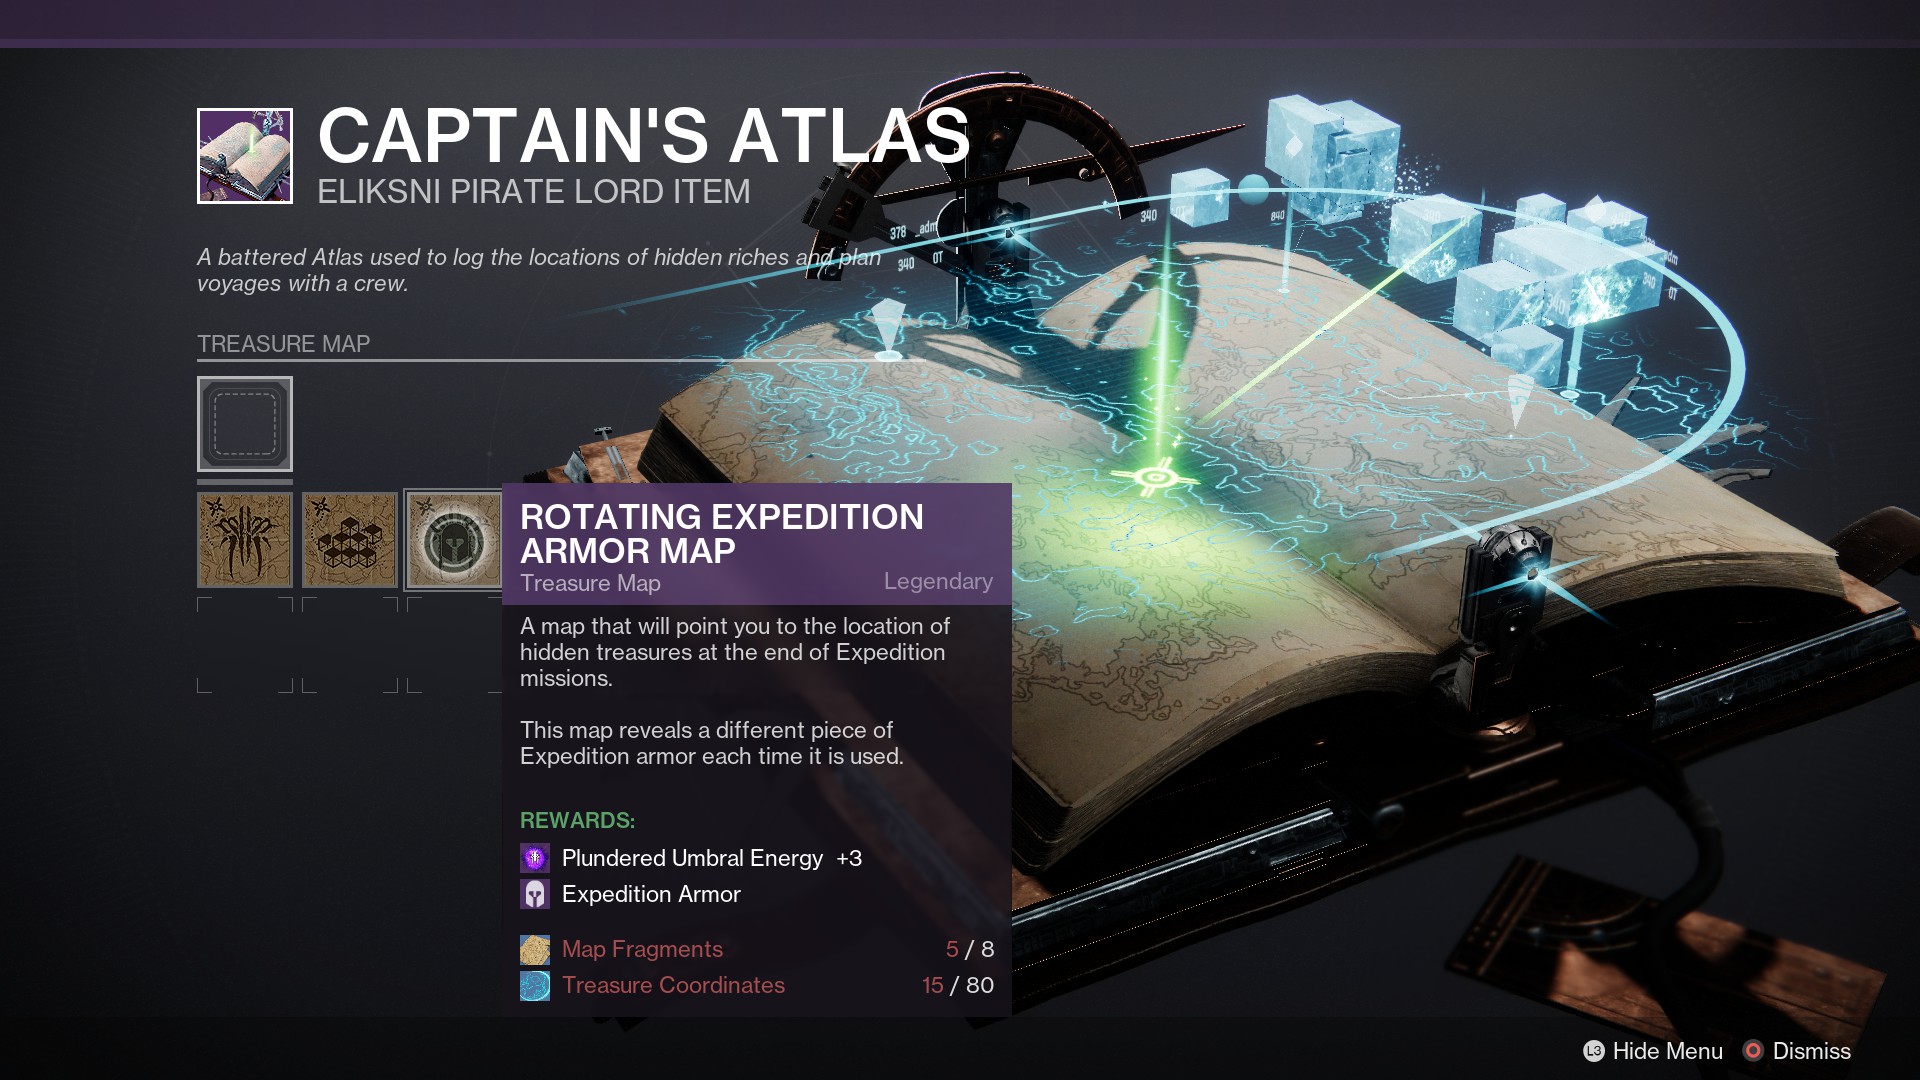 Destiny 2 treasure map slot in Captain's Atlas